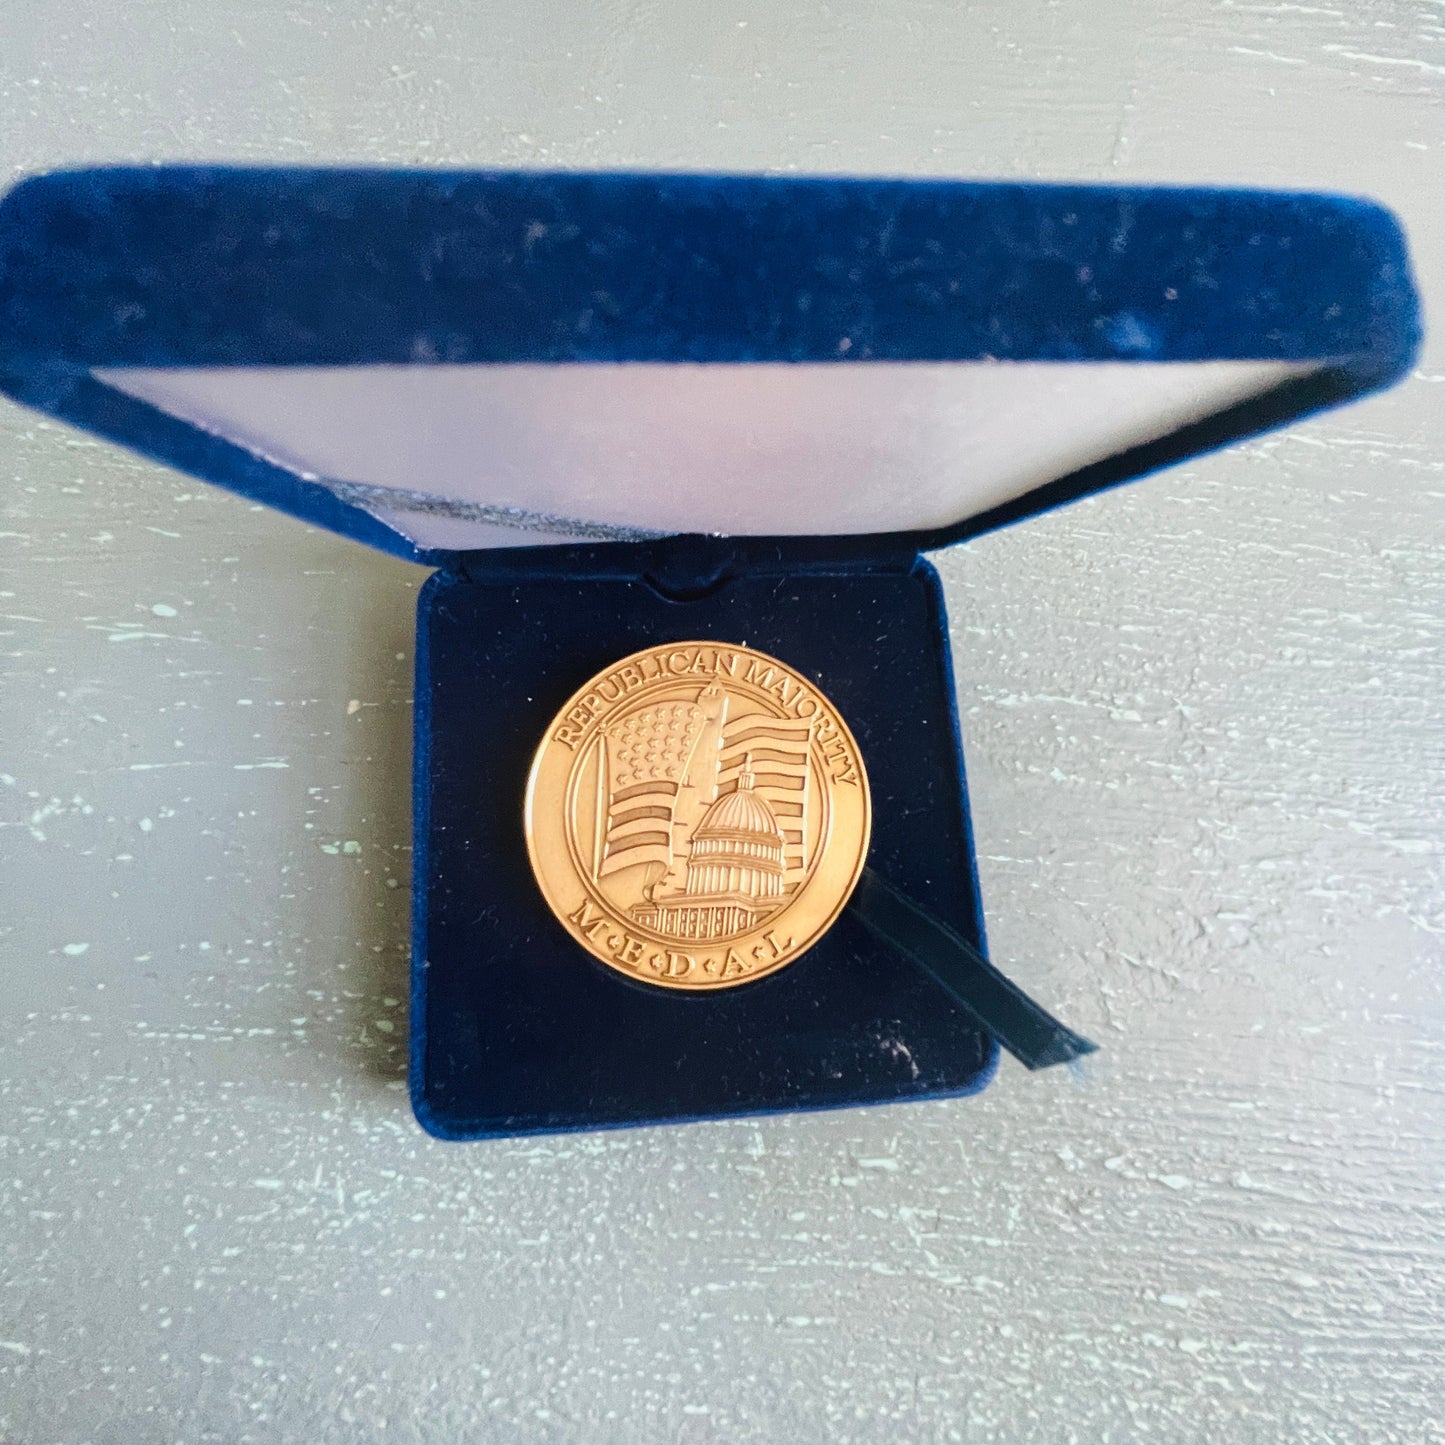 Republican Majority, gold-tone coin, commemorative  Medal, Vintage 1997, Collectible